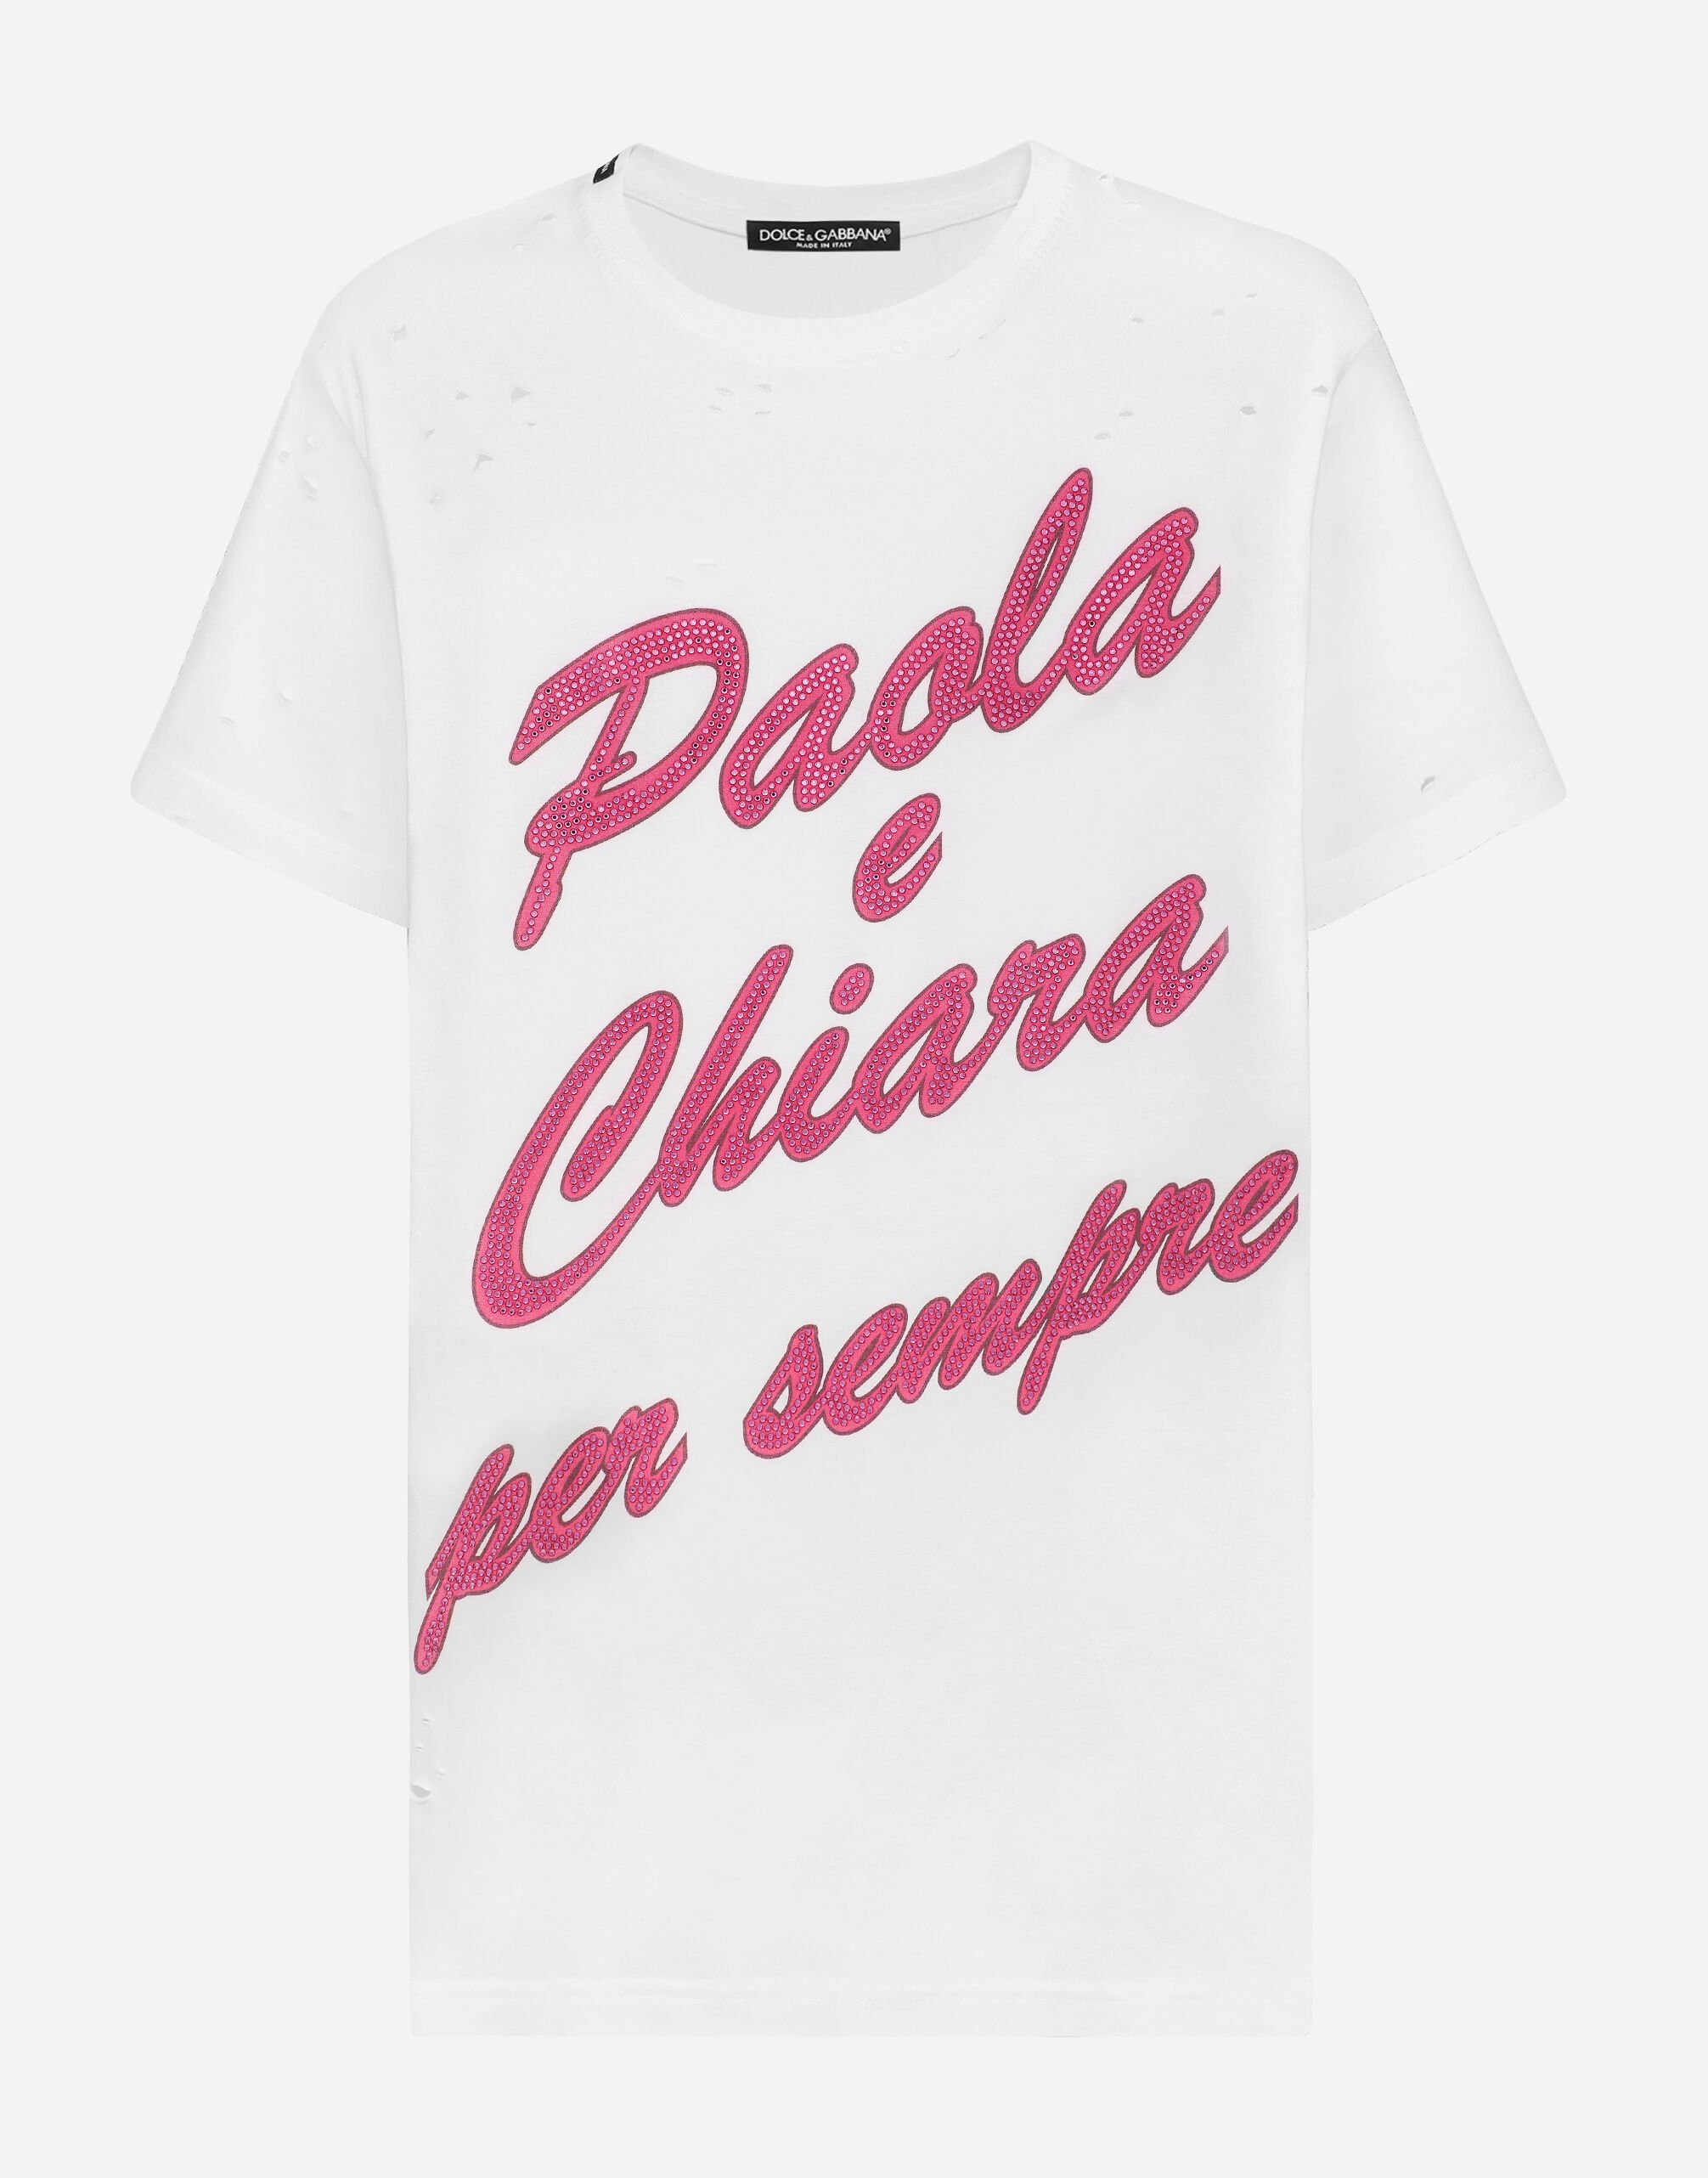 Dolce&Gabbana T-shirt "Paola e Chiara per sempre" Bianco I8AOIMG7LD7